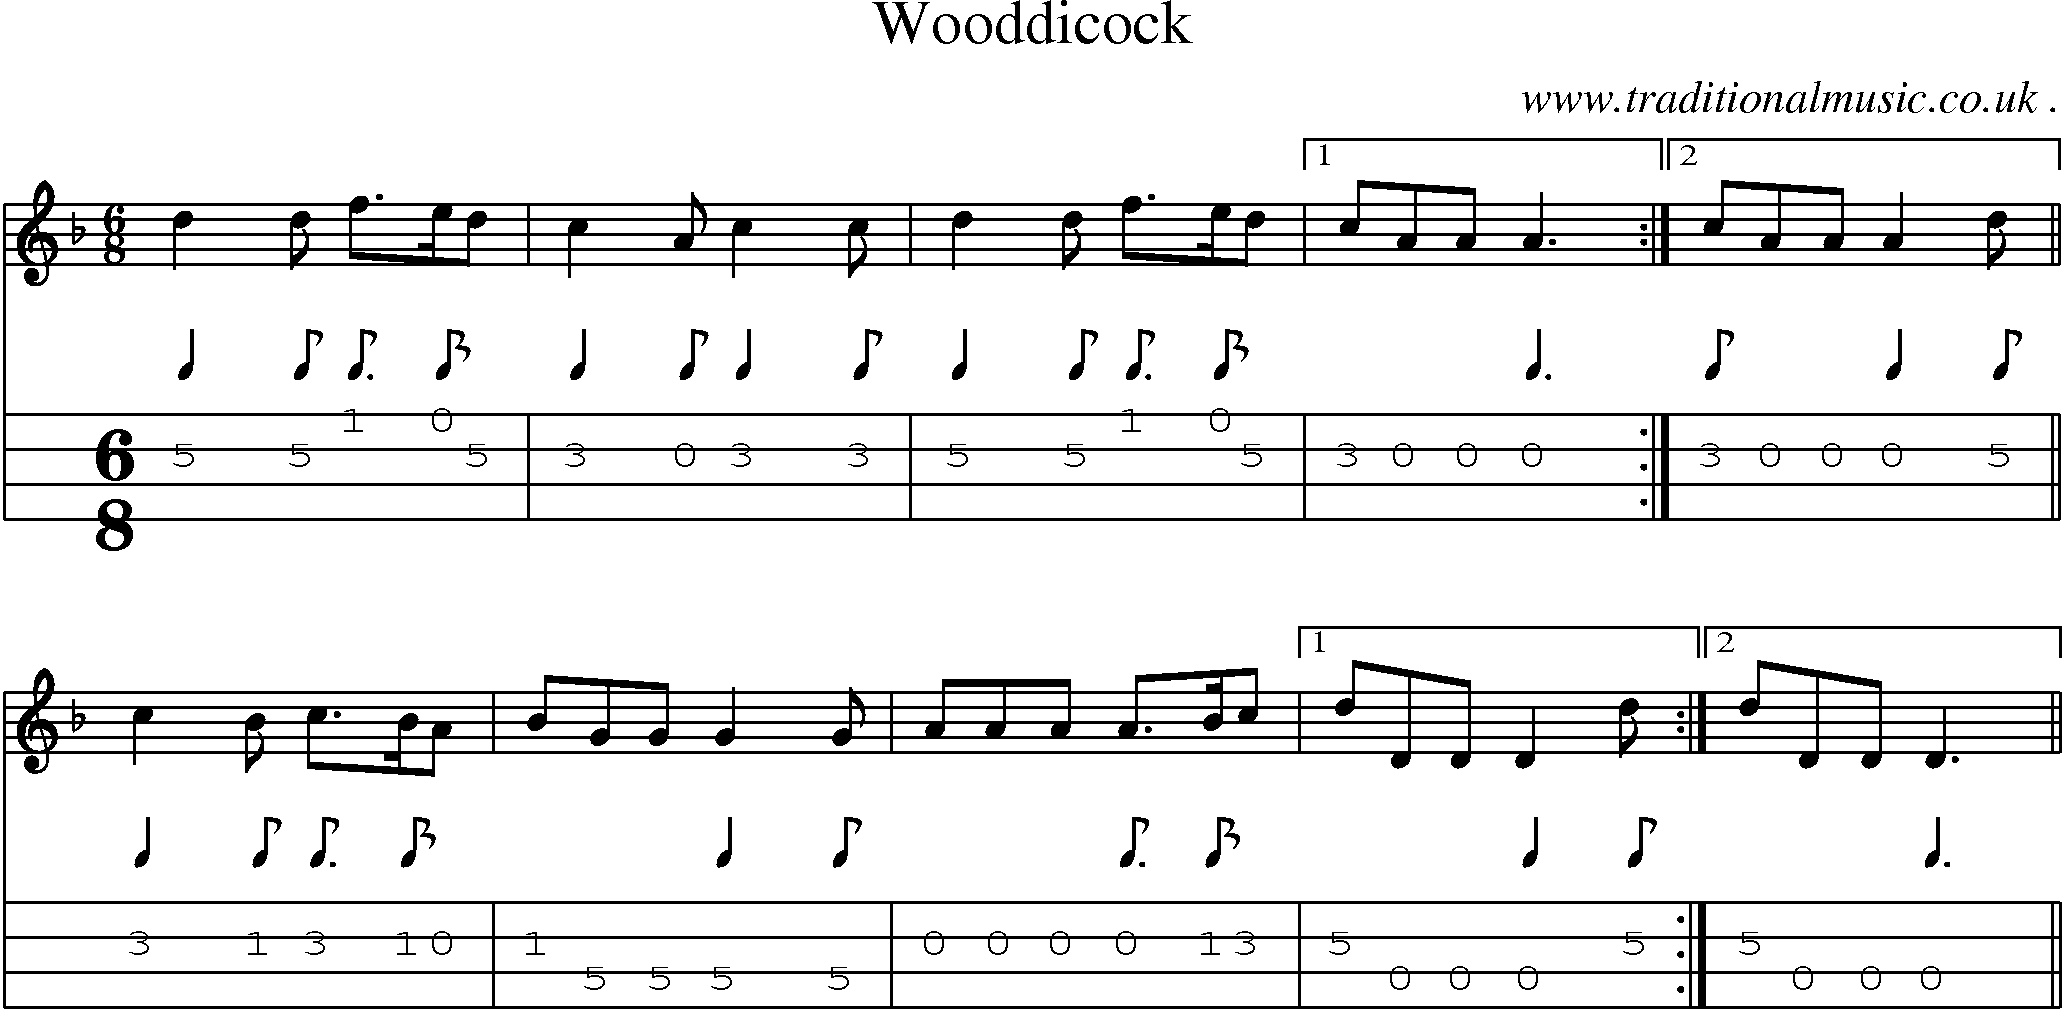 Sheet-music  score, Chords and Mandolin Tabs for Wooddicock